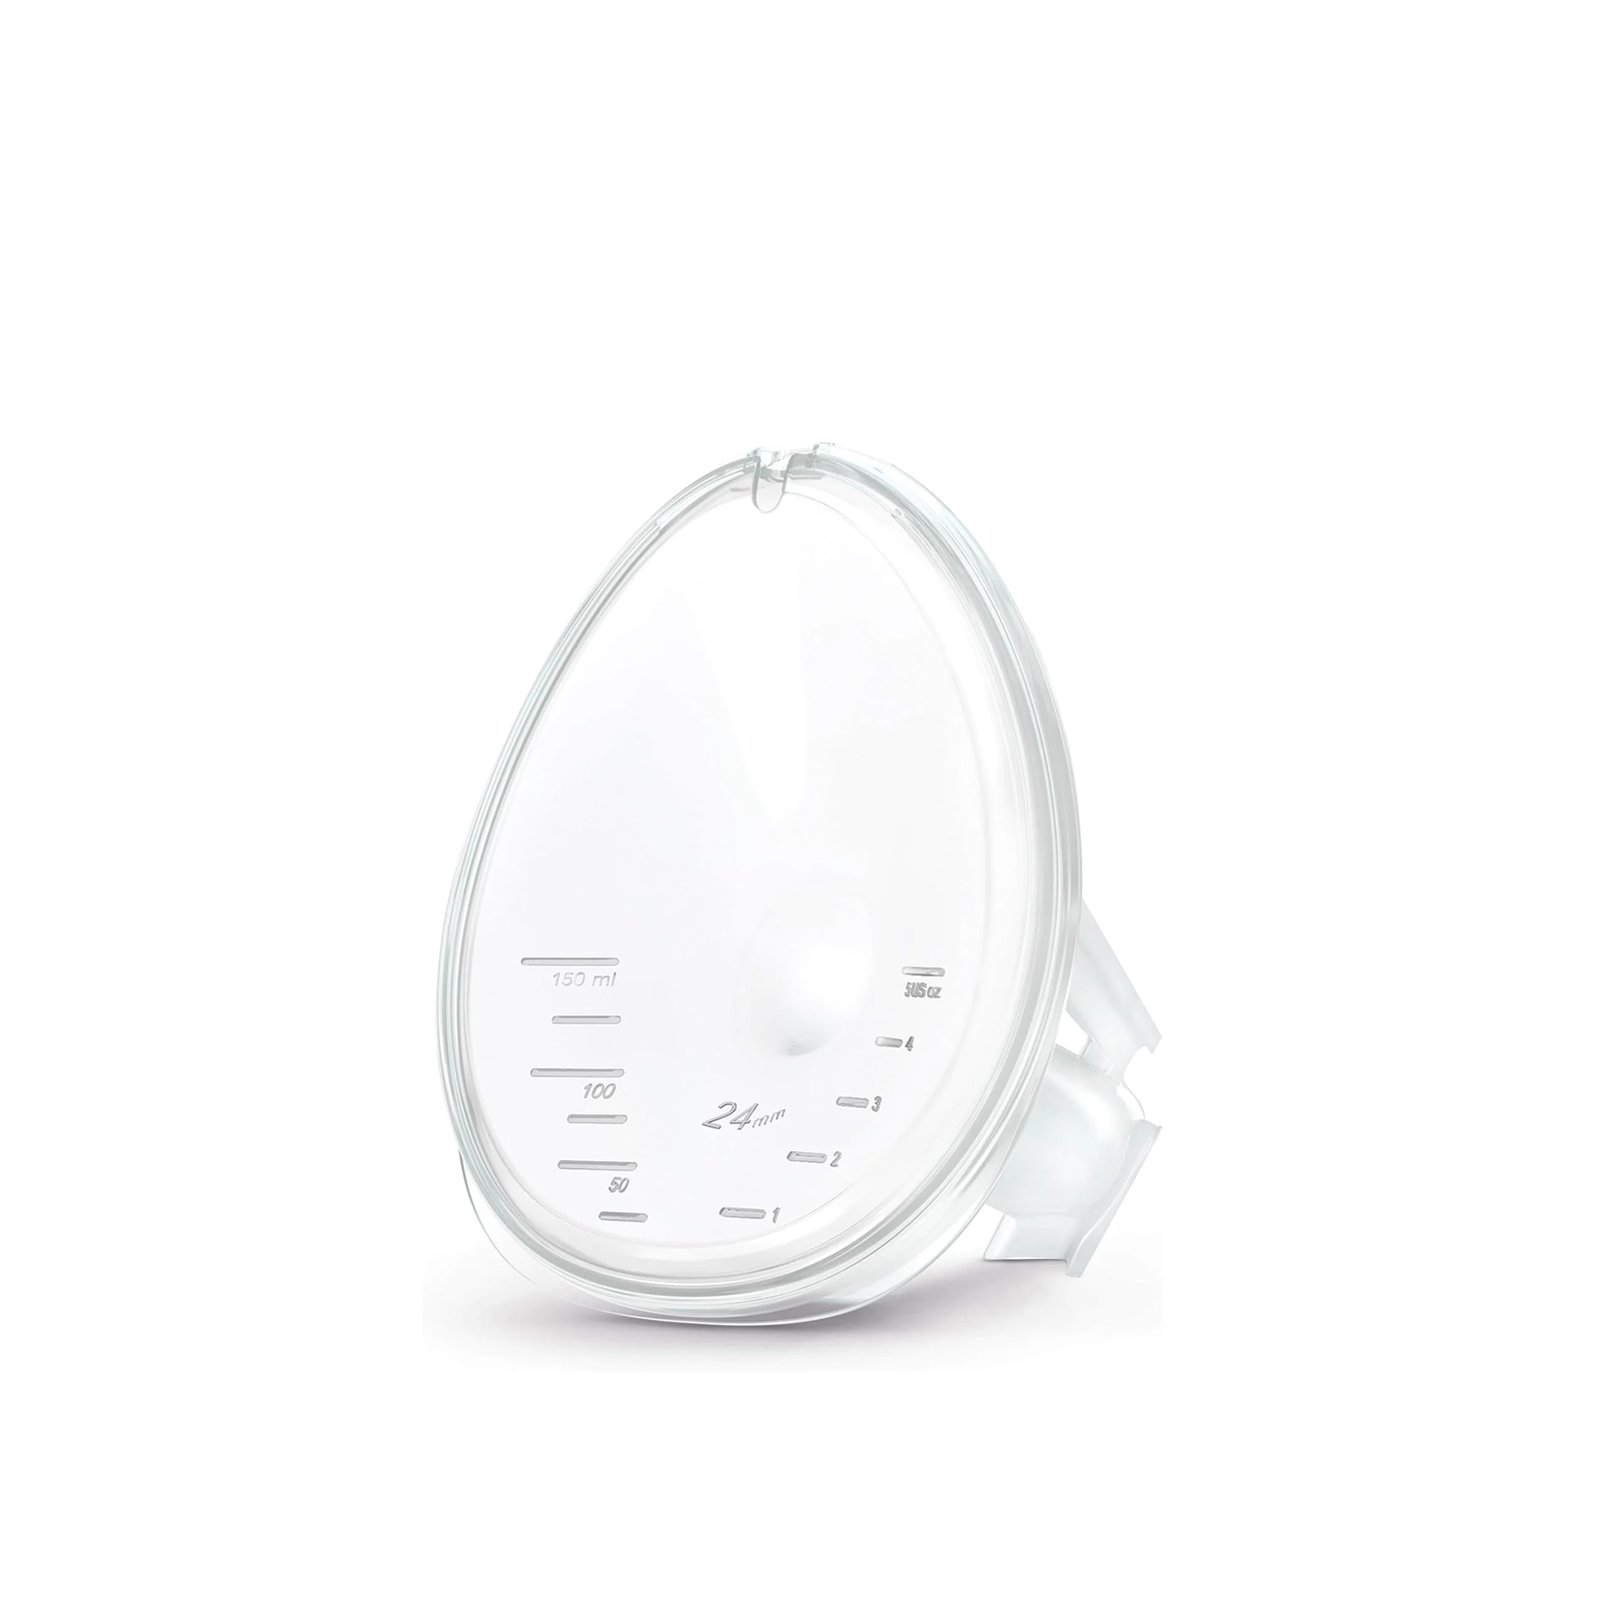 Medela Contact Nipple Shield for Breastfeeding, 24mm Medium, 2 shields